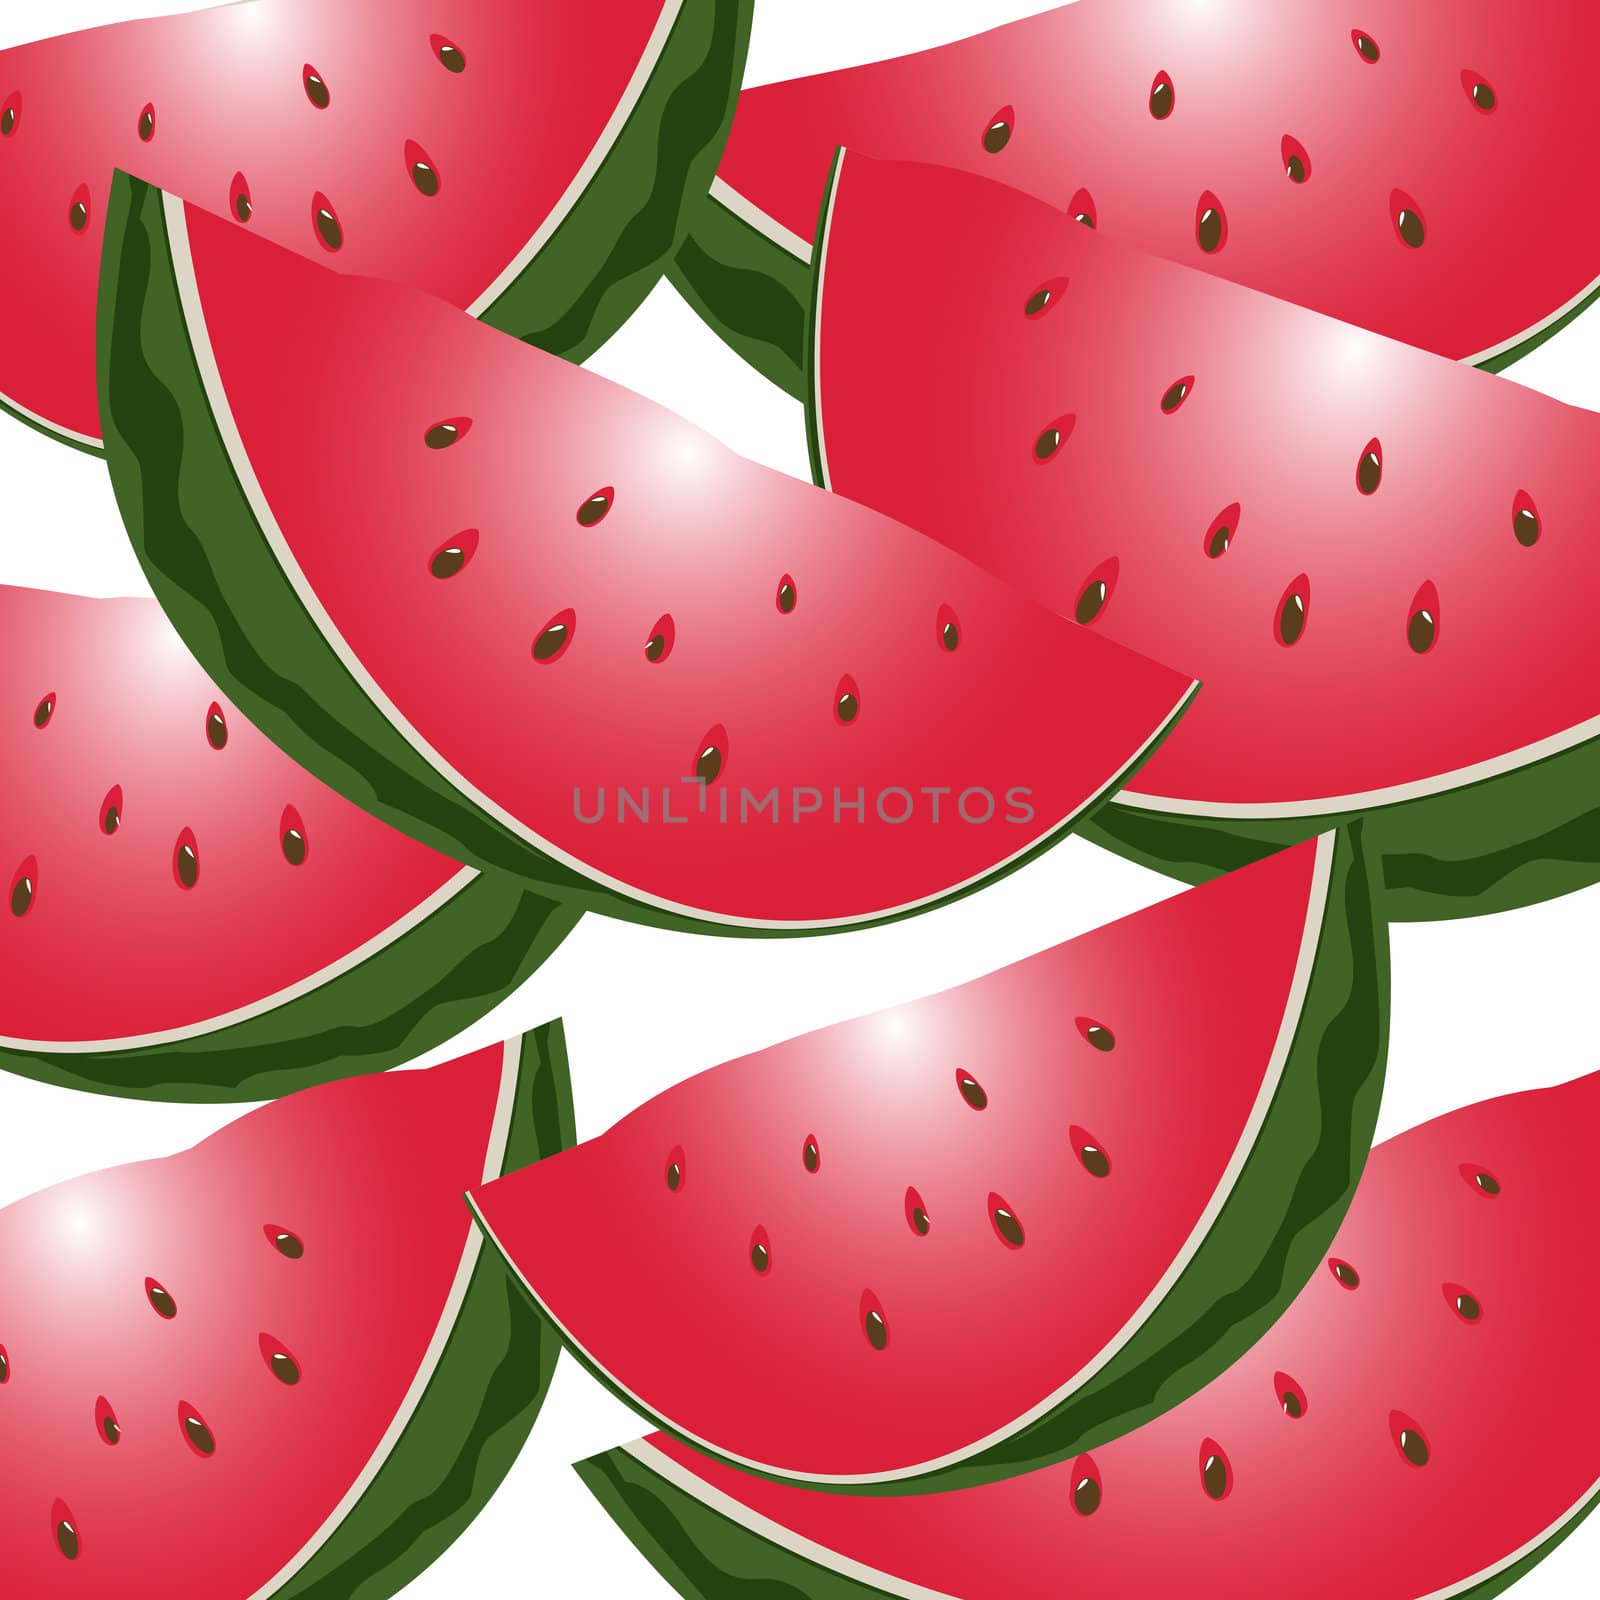 watermelon by Lirch